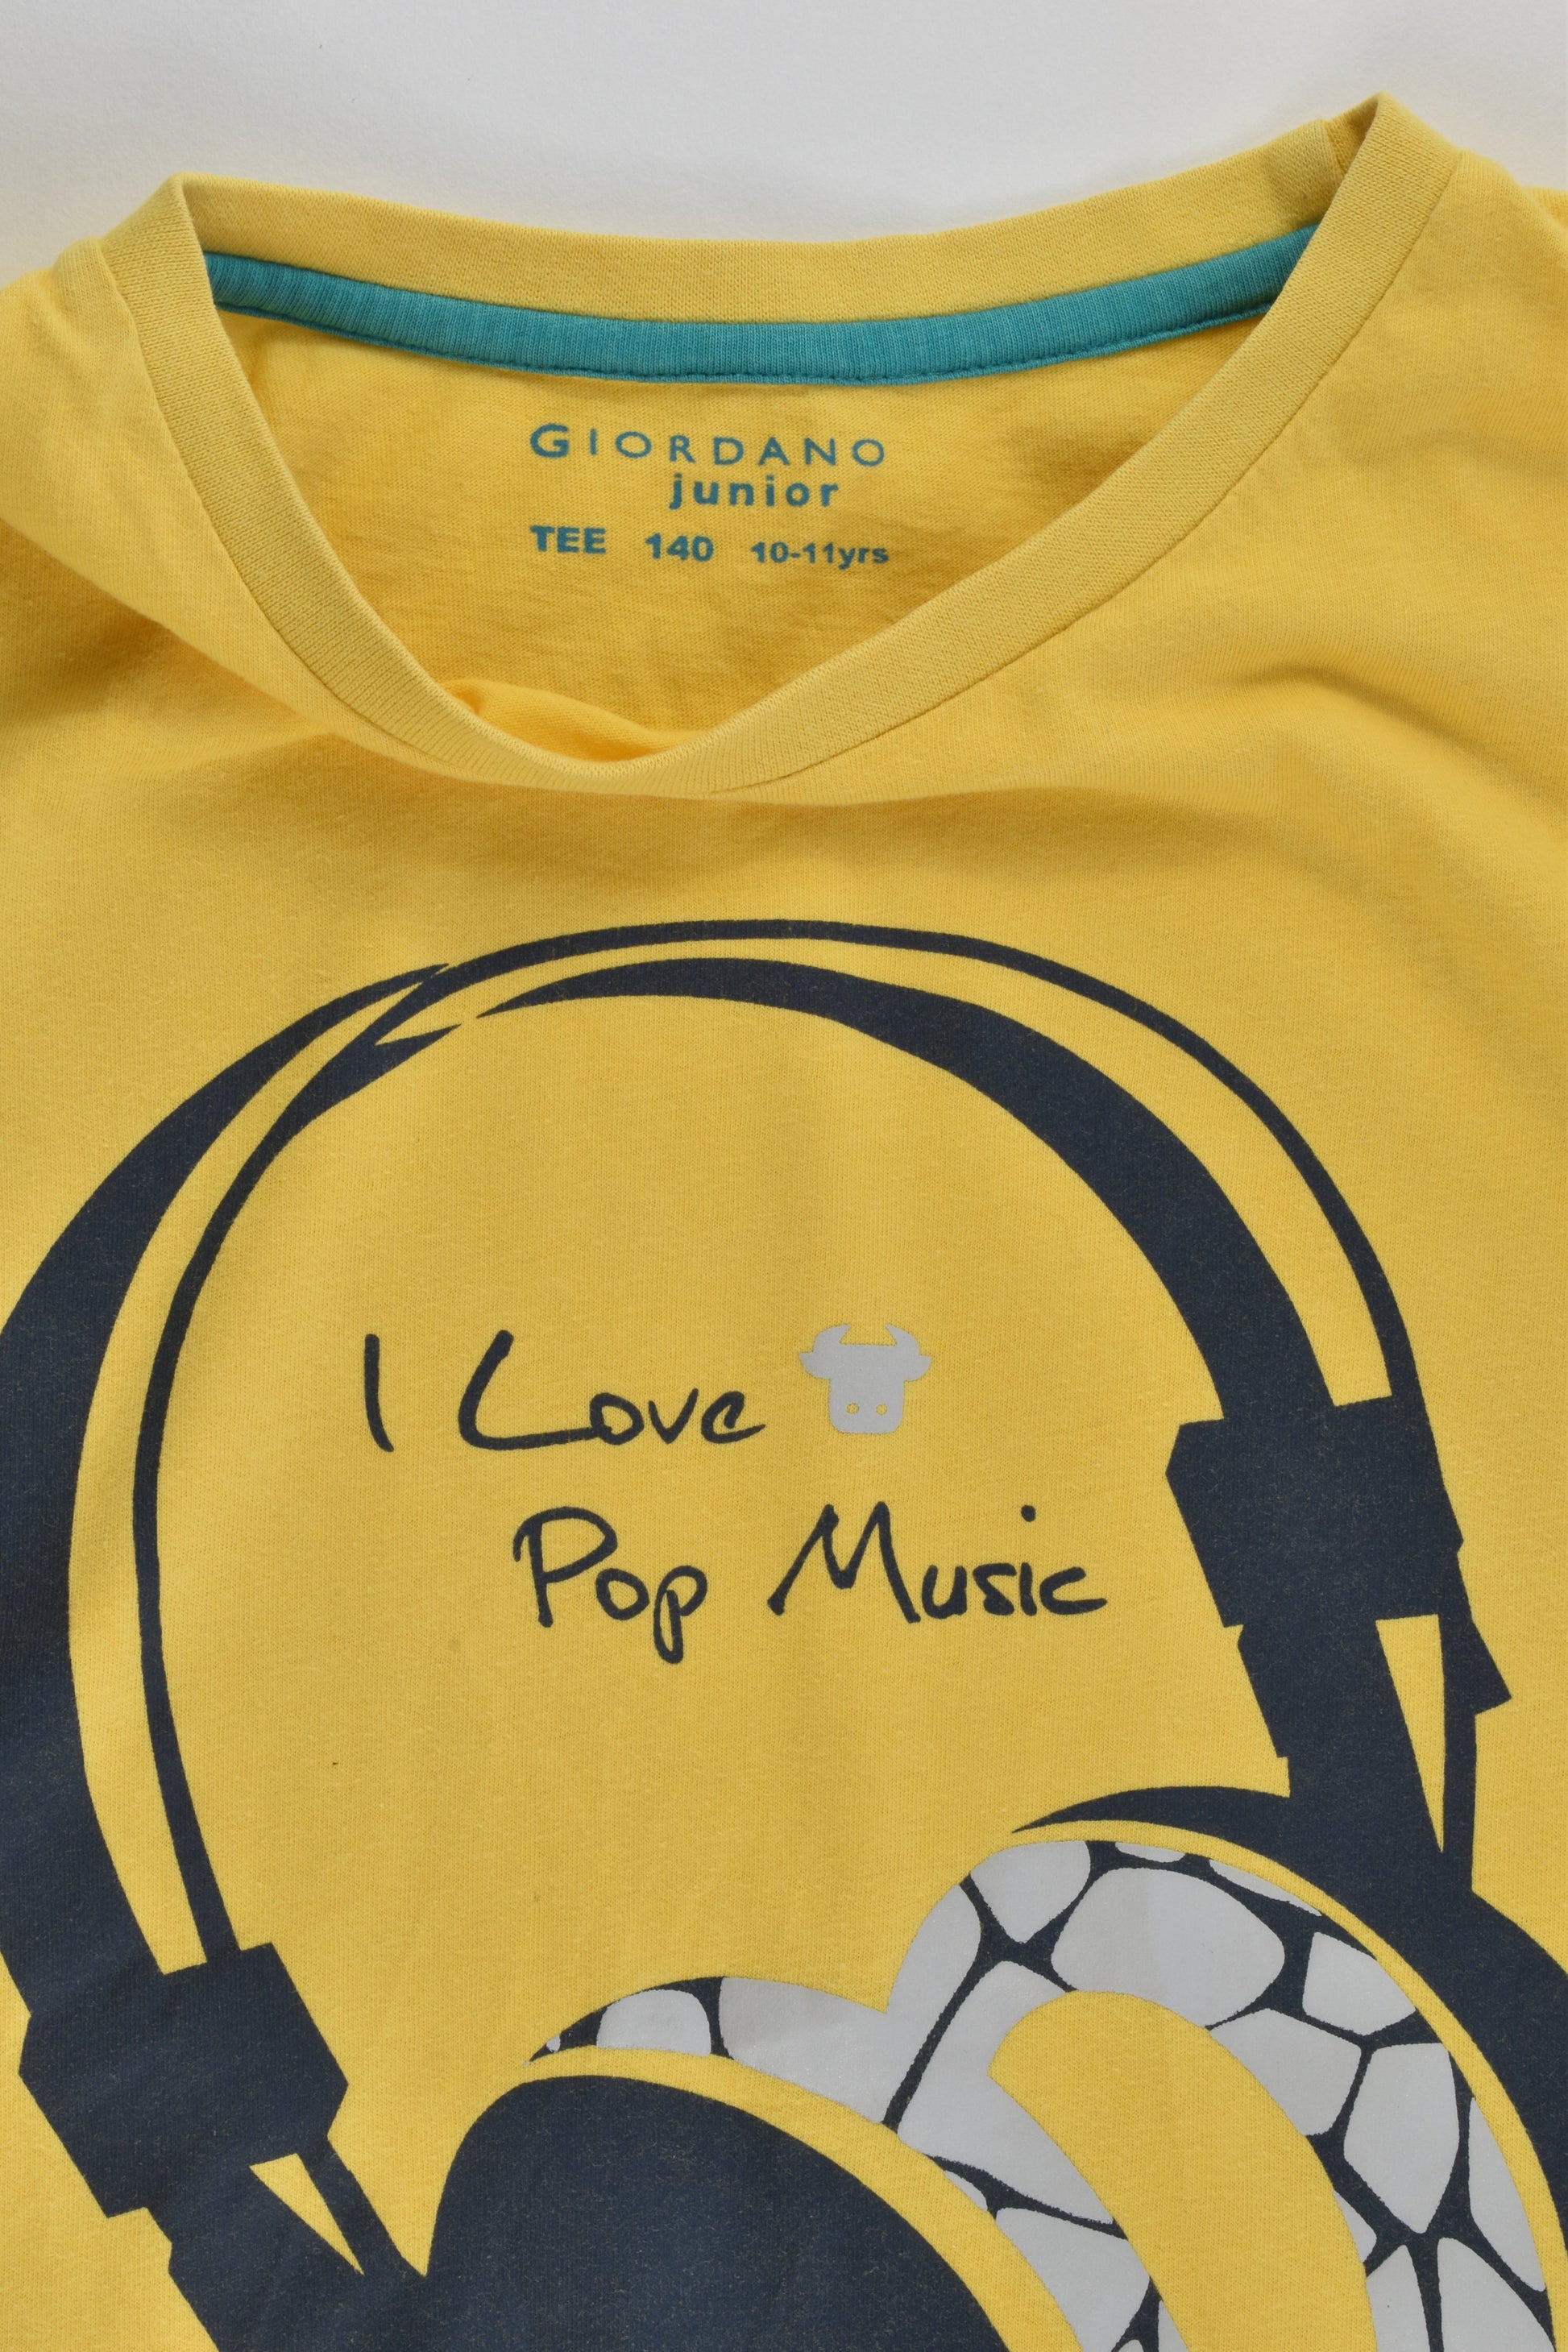 Giordano Junior Size 10-11 (140 cm) 'I Love Pop Music' T-shirt